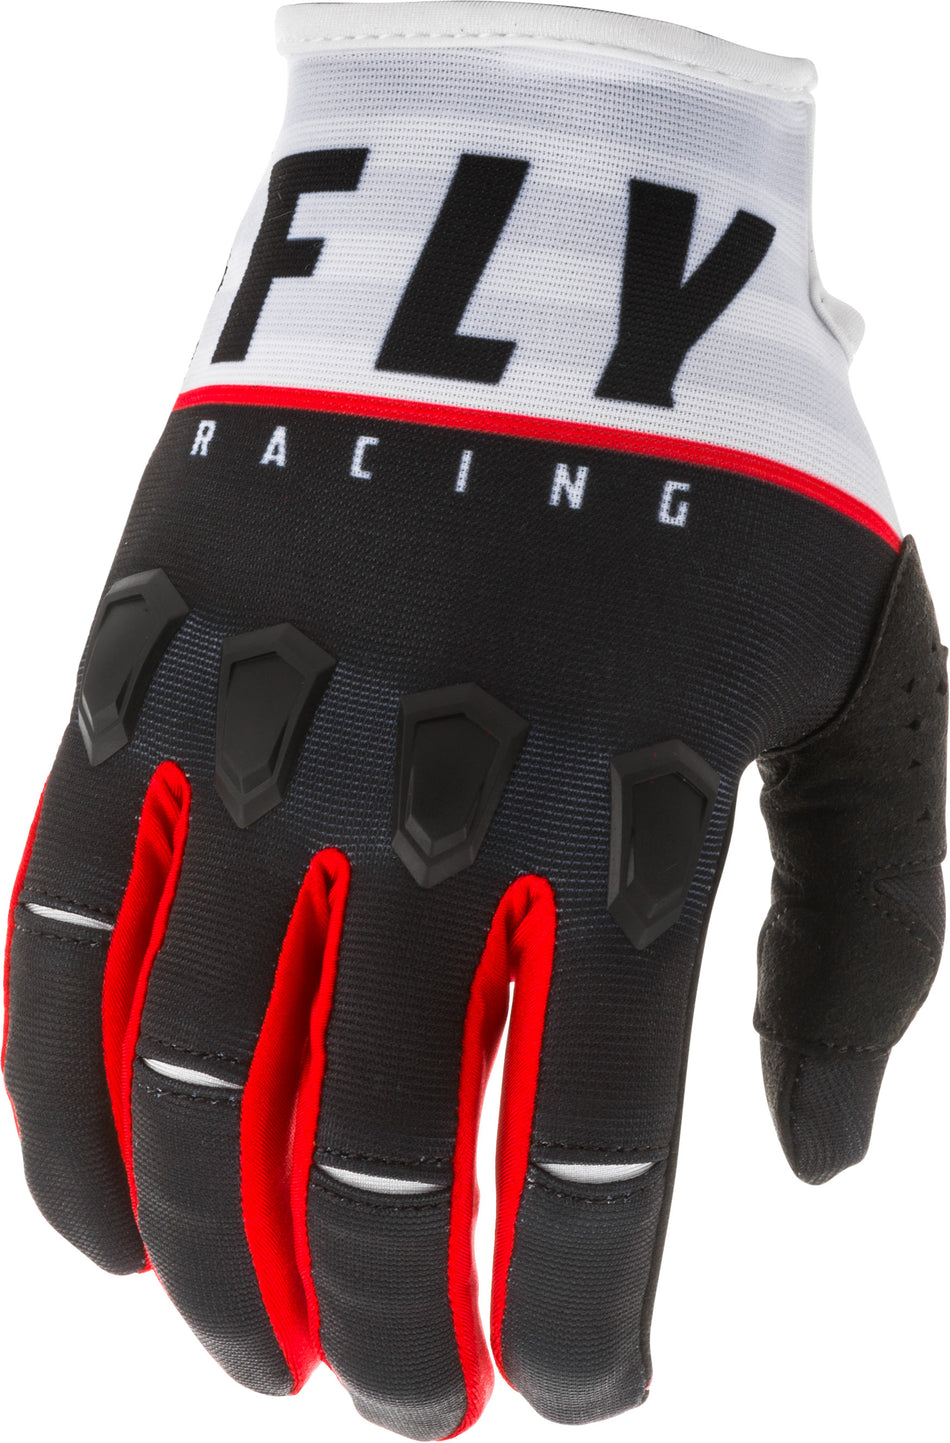 FLY RACING Kinetic K120 Gloves Black/White/Red Sz 05 373-41305